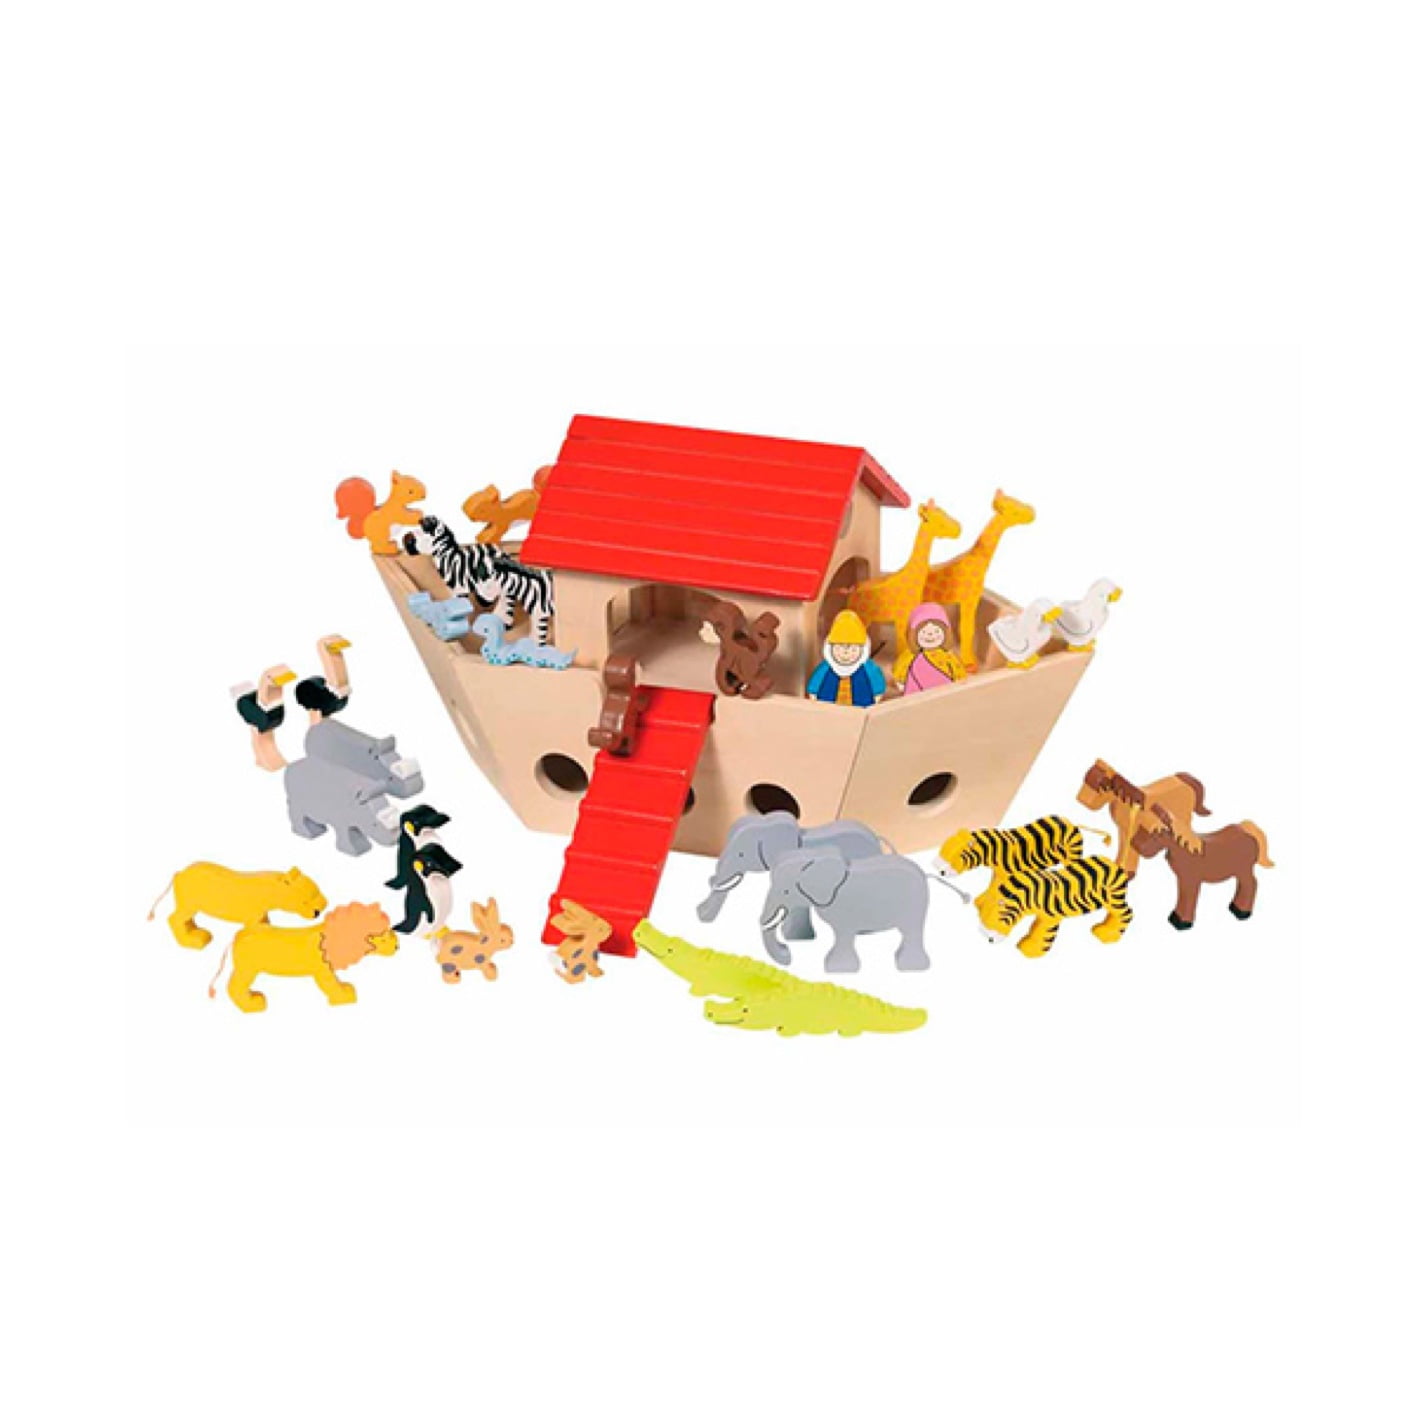 Noah's Ark with animals